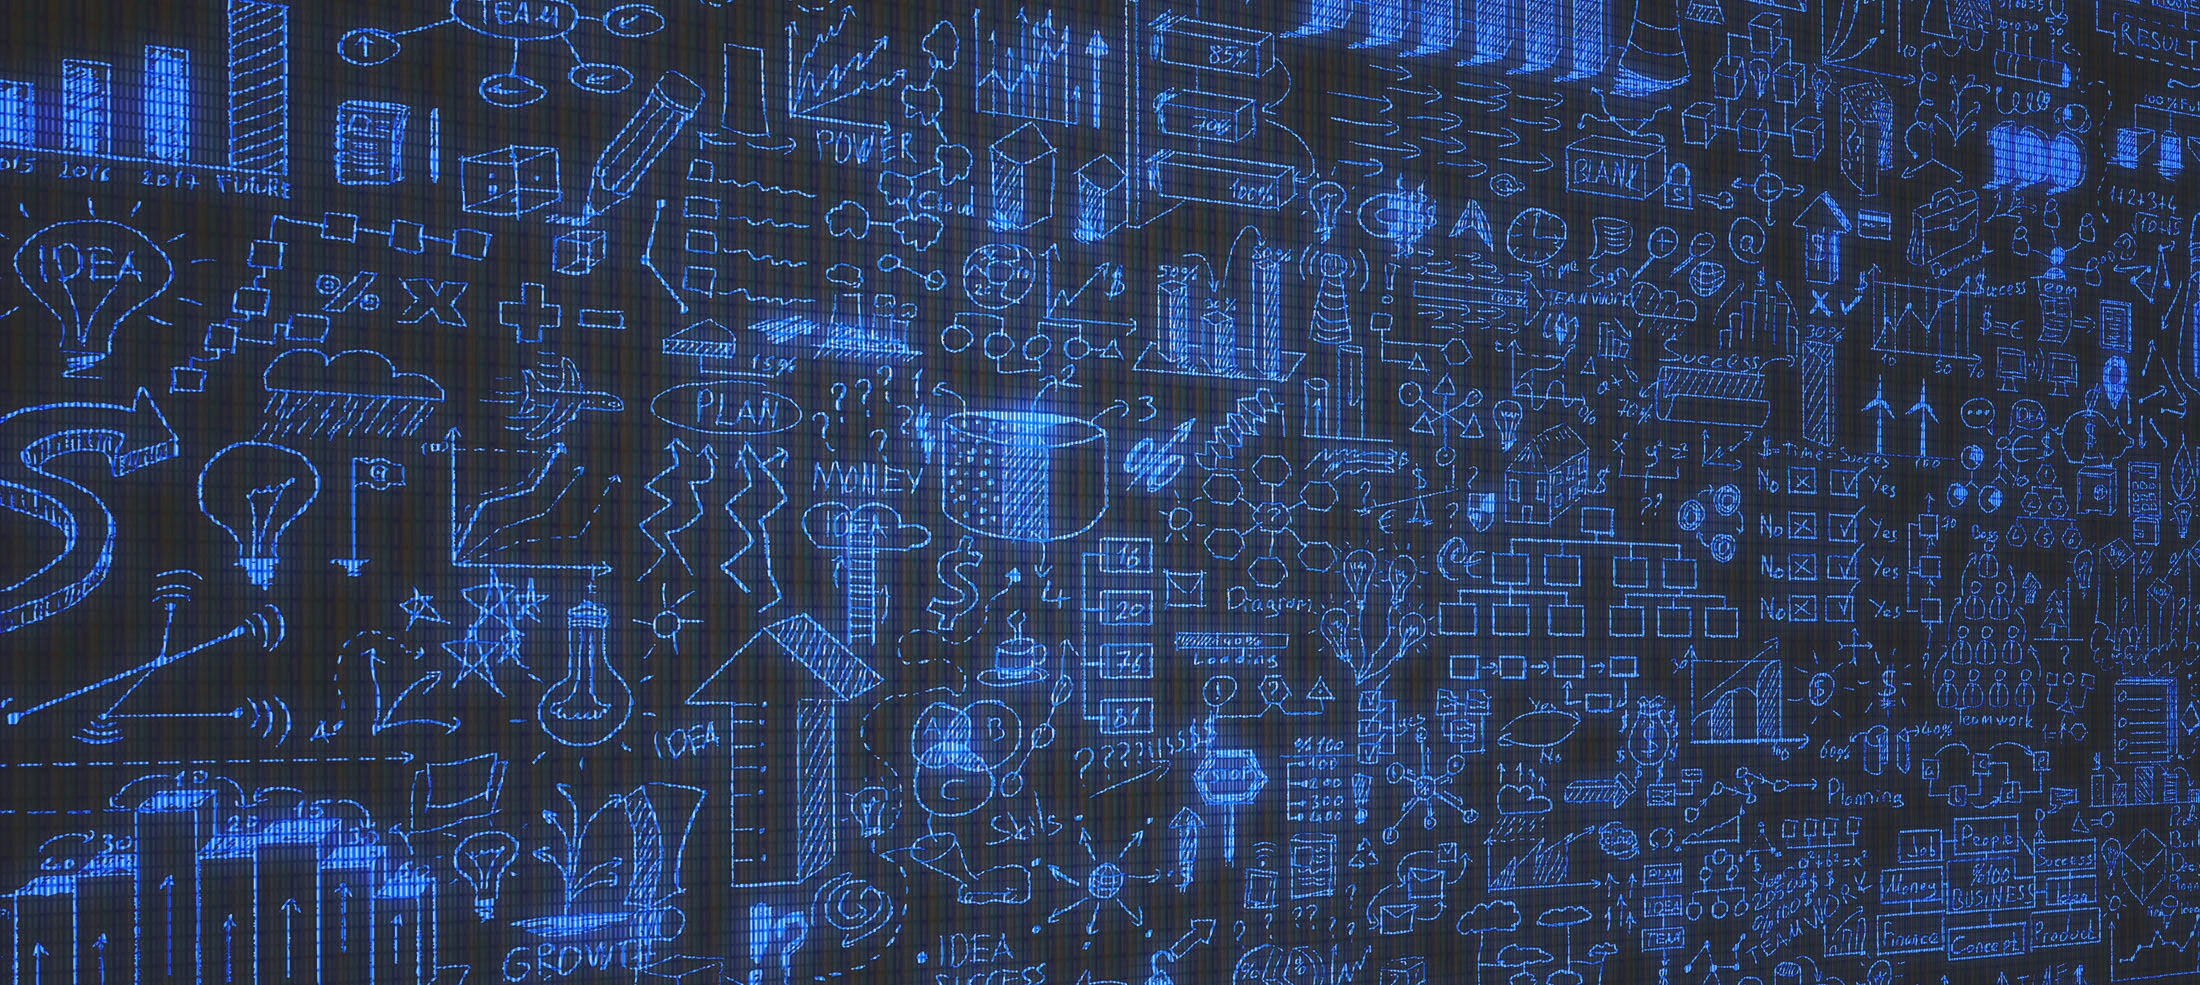 Digital board of business symbols in blue